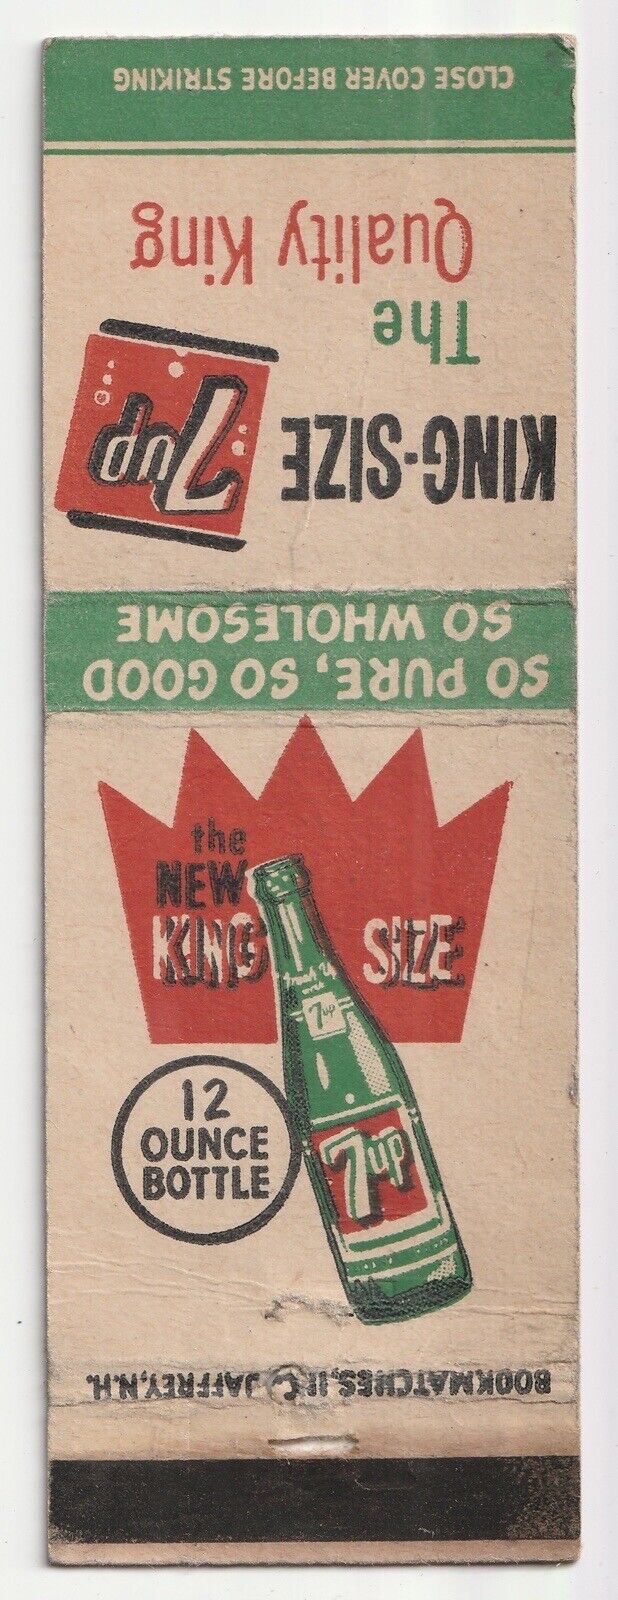 c1950s 12oz King Size 7 Up Vintage Soda Advertisement Matchbook Cover